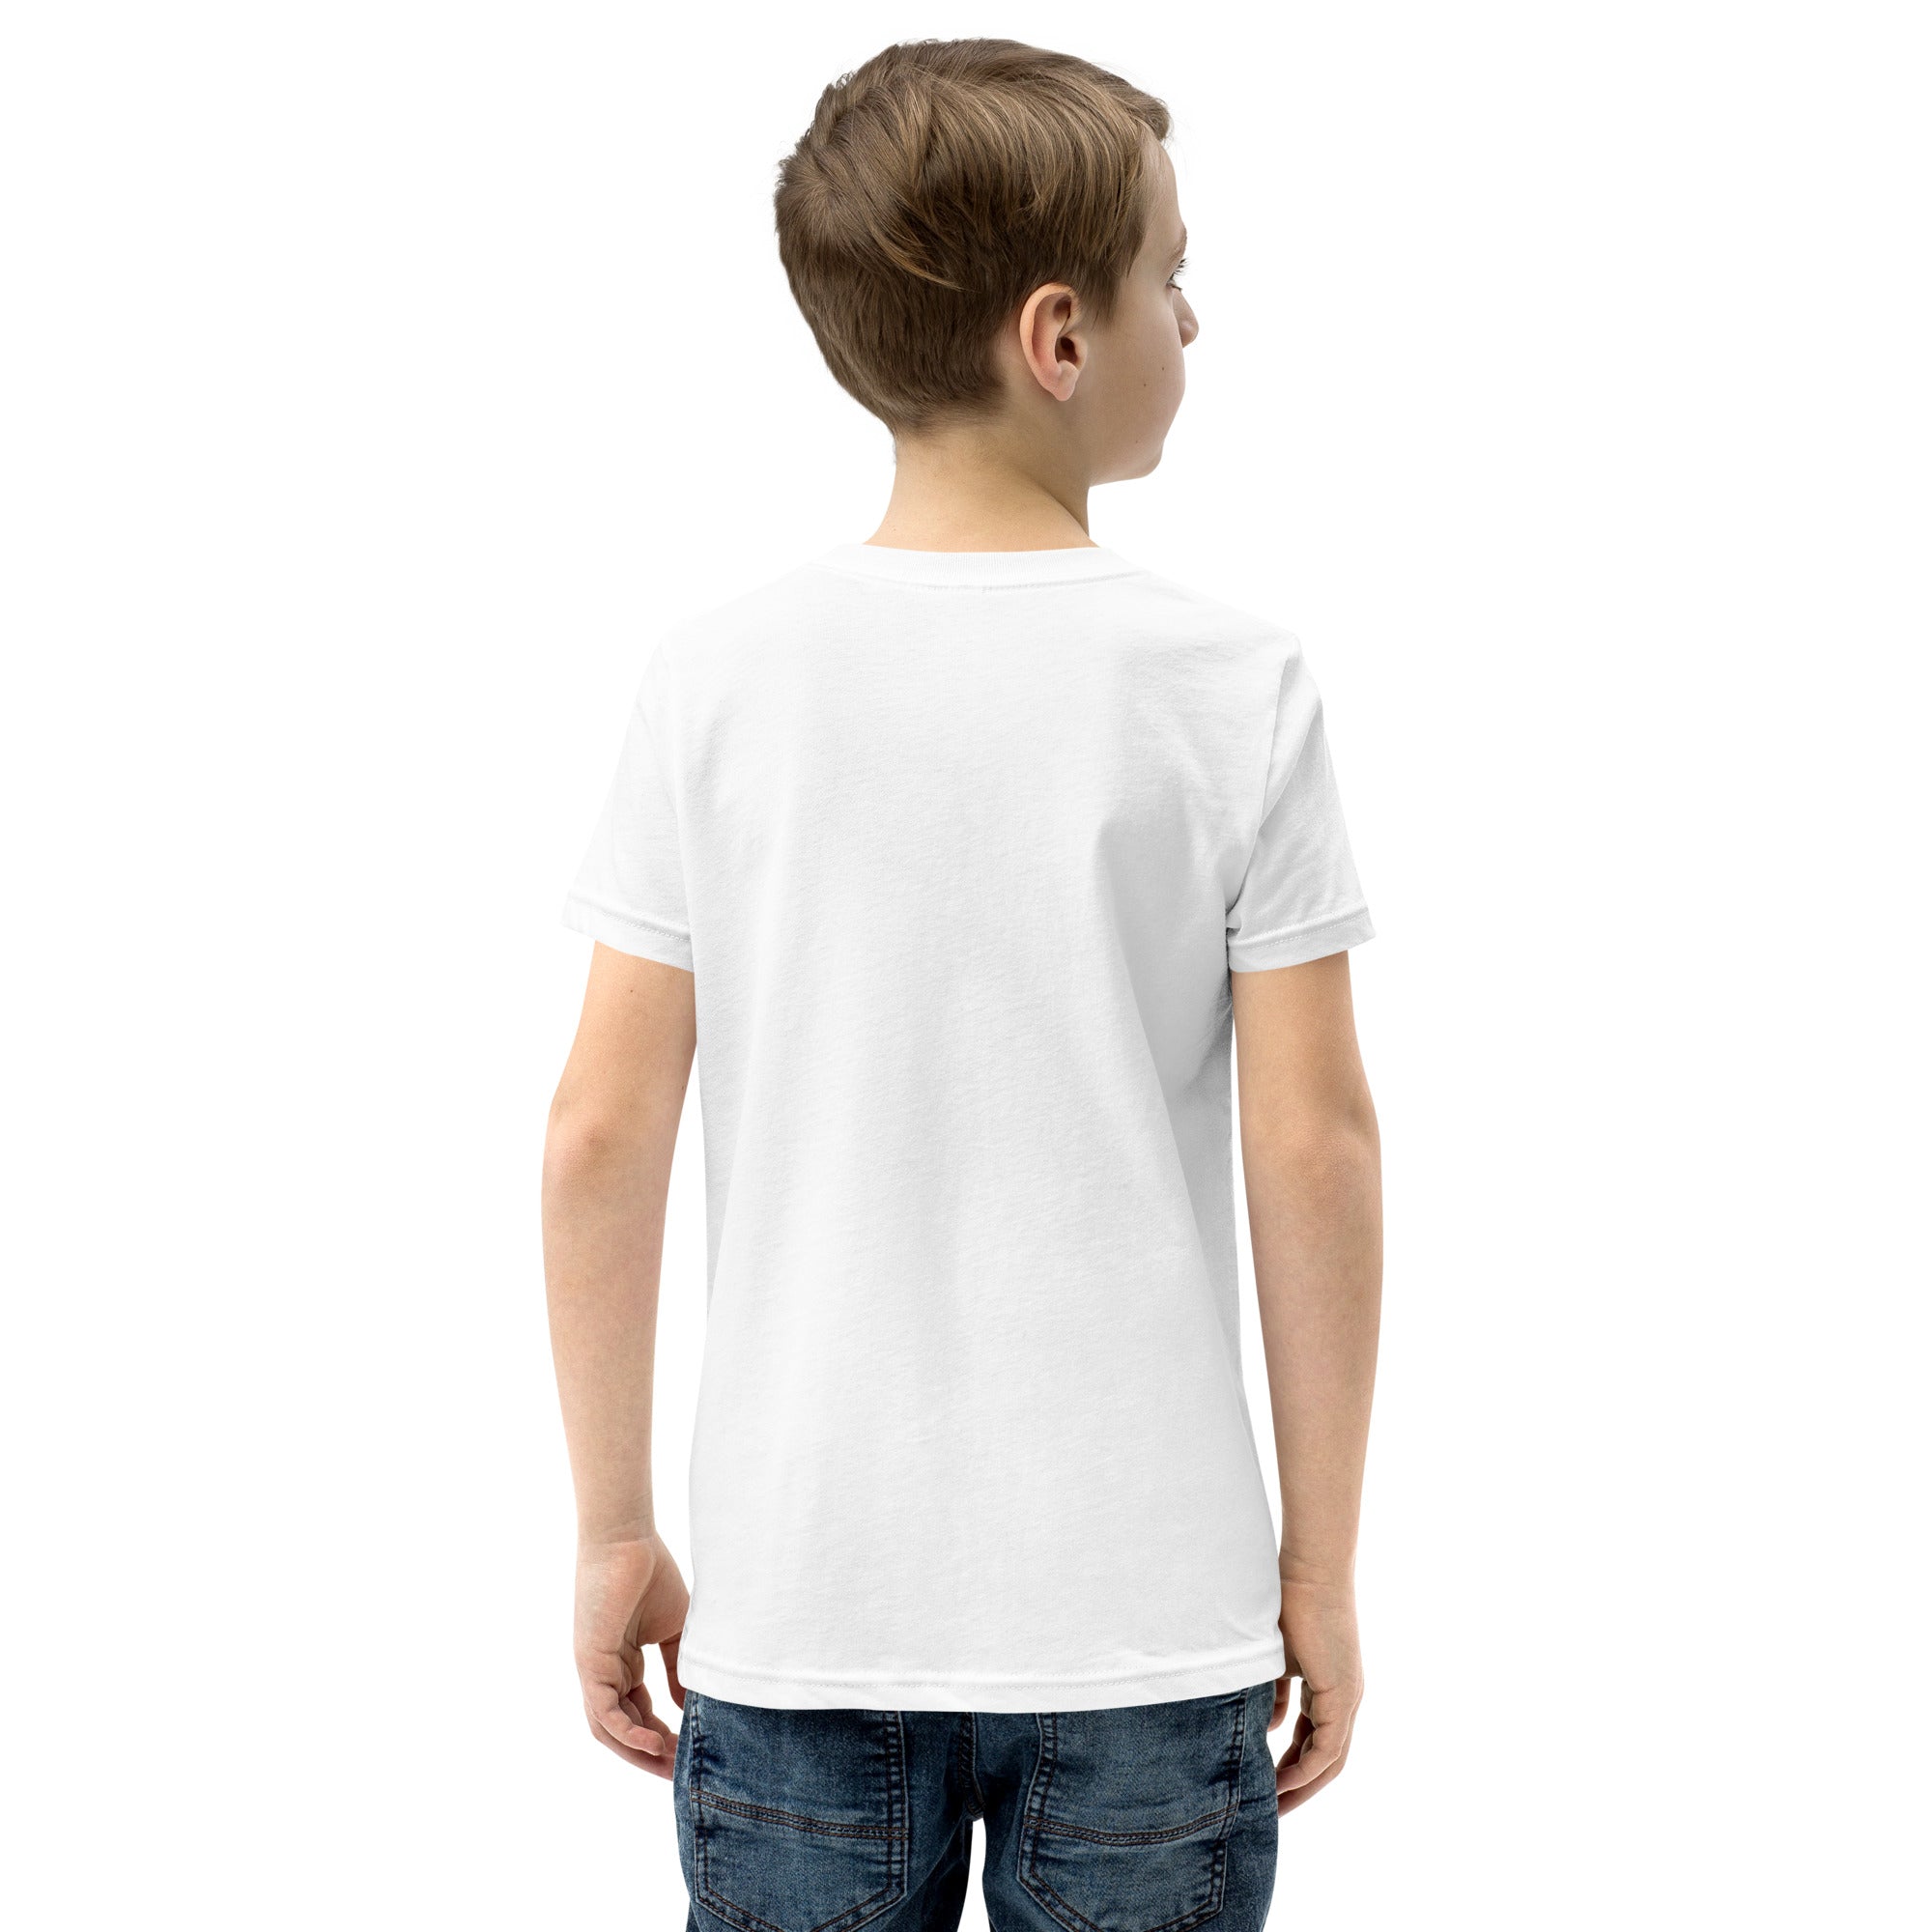 Edmond Logo R/B - White Youth Short Sleeve T-Shirt